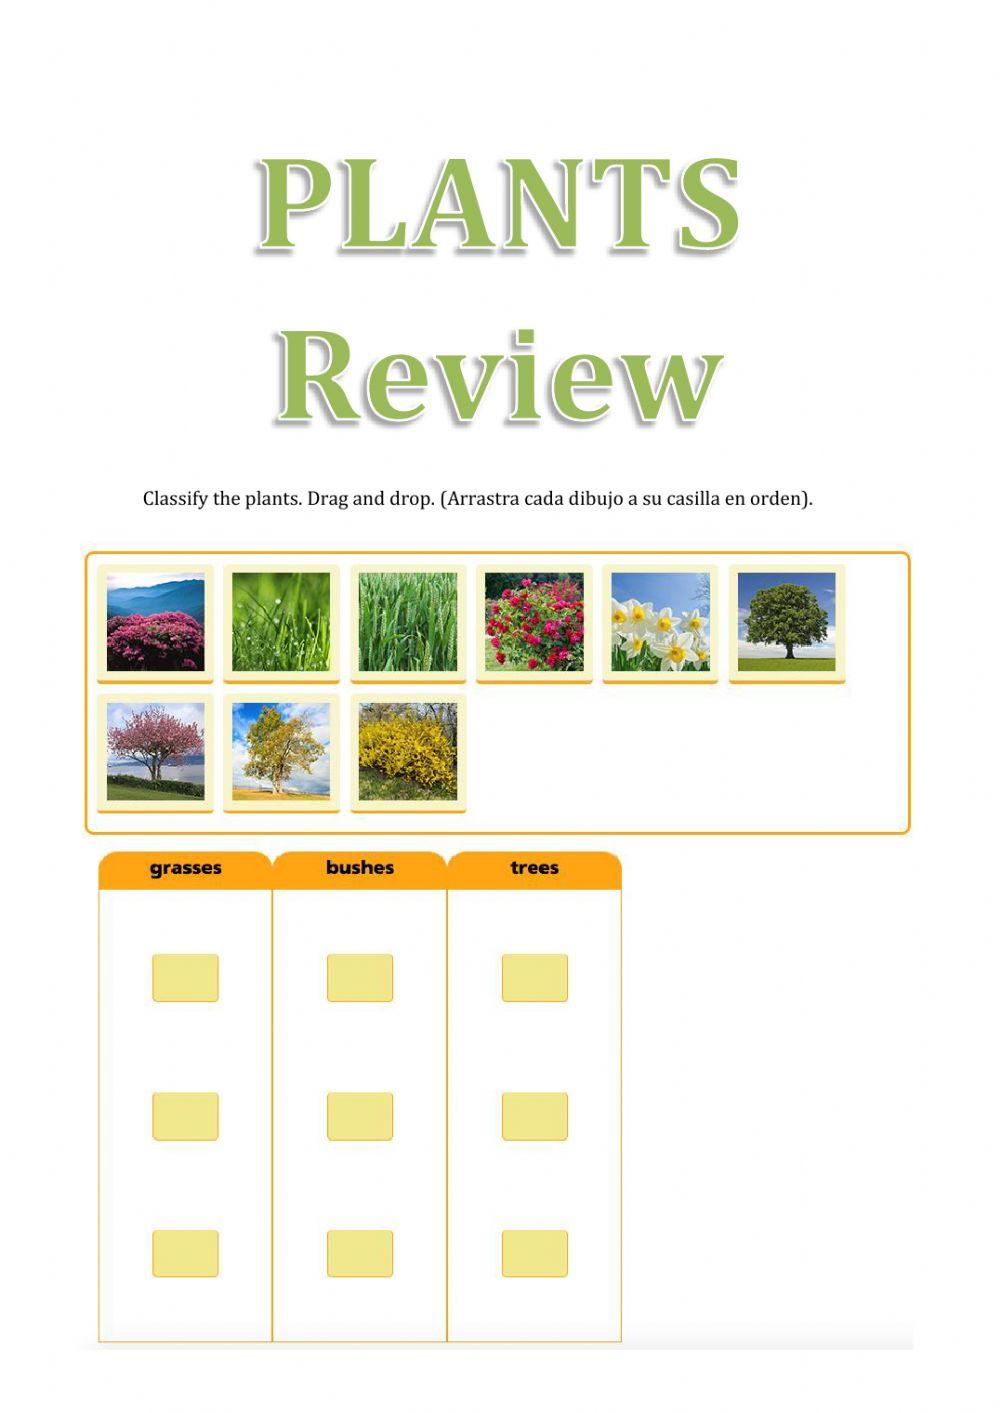 Plants review